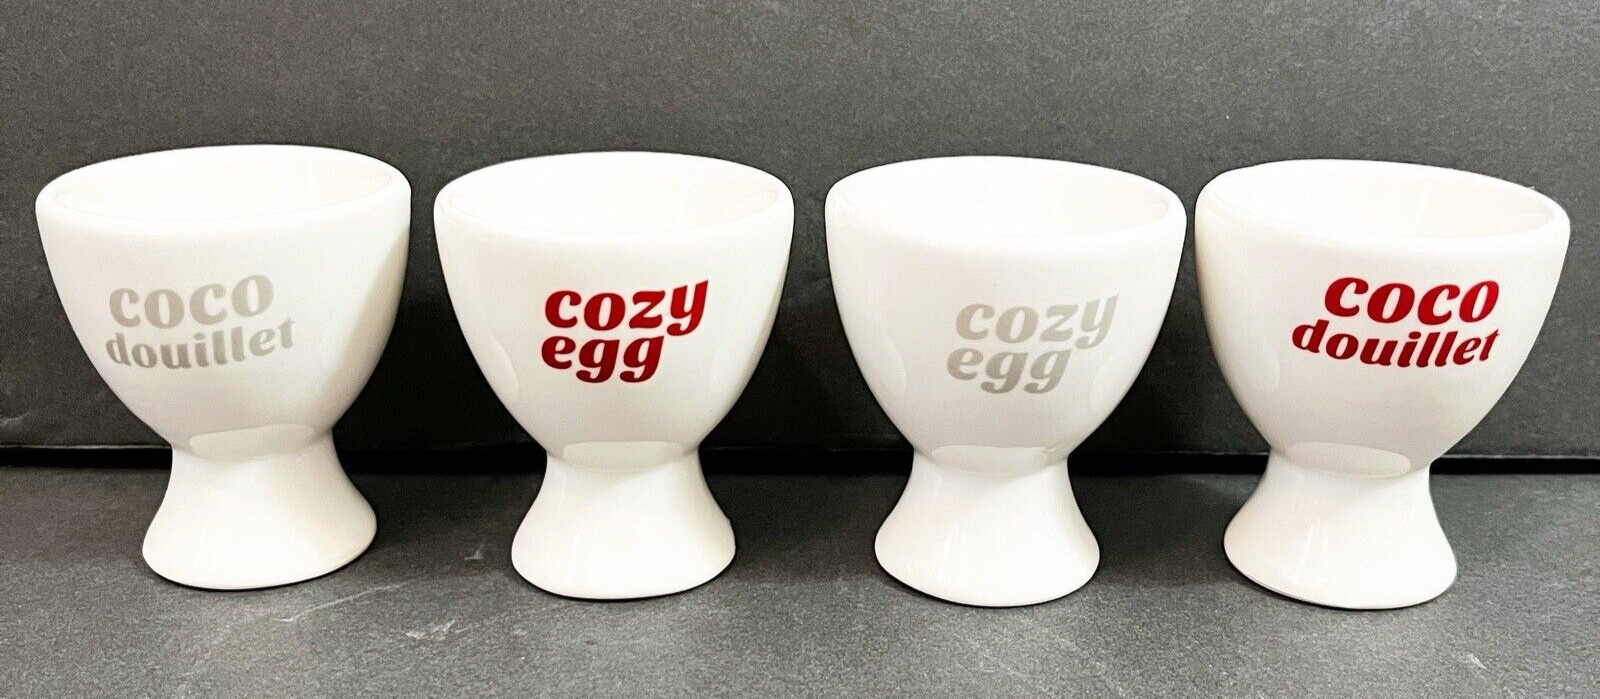 Lot 4 Vintage Ceramic Egg Cups White Cozy Egg Coco Douillet Easter Burgundy Gray